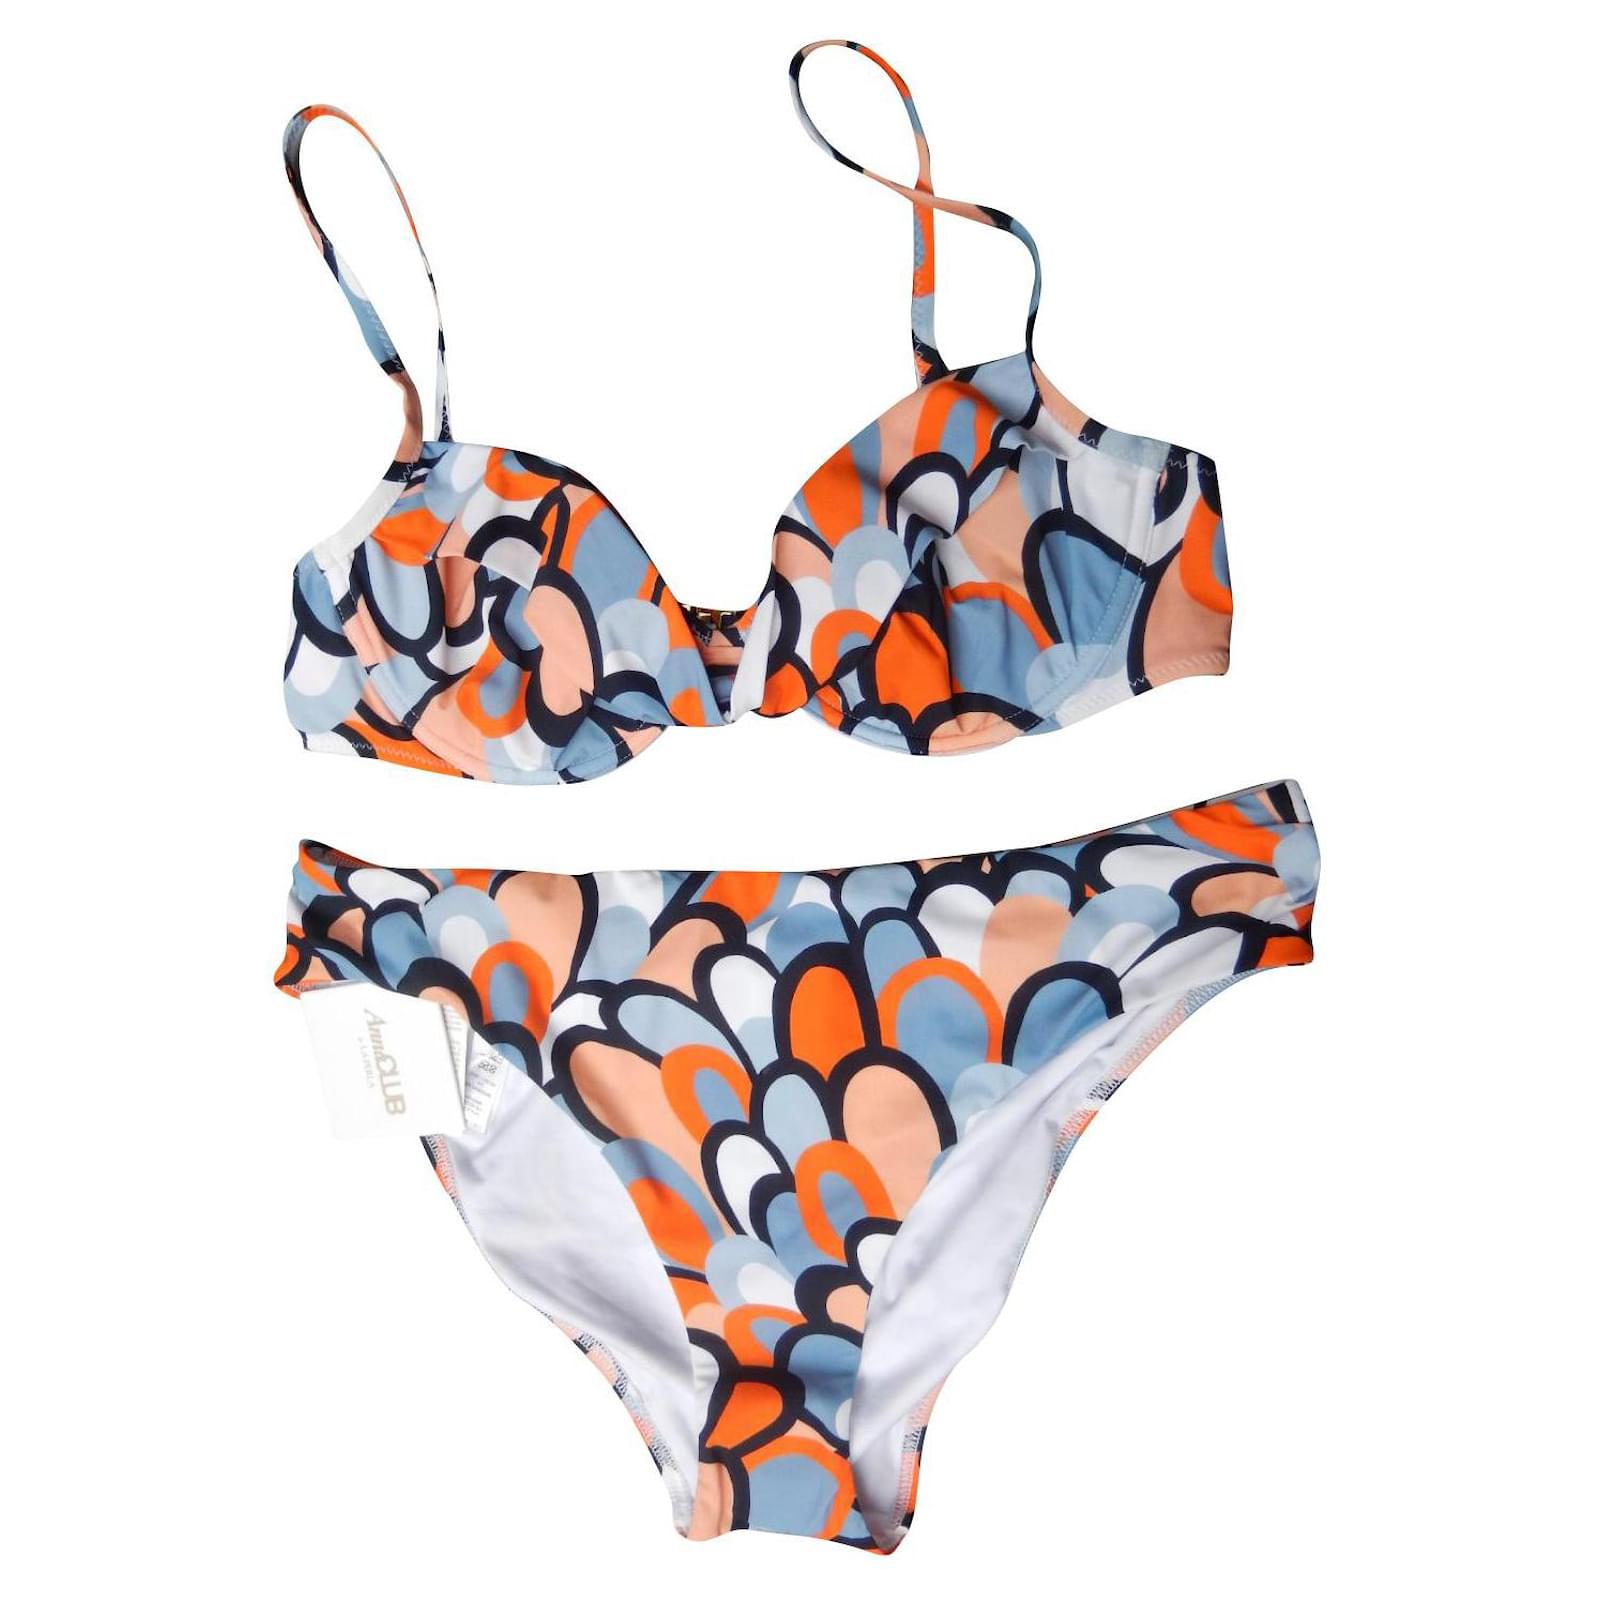 https://cdn1.jolicloset.com/imgr/full/2022/01/439025-1/multiple-colors-lycra-la-perla-swimsuit-42-b-swimwear.jpg